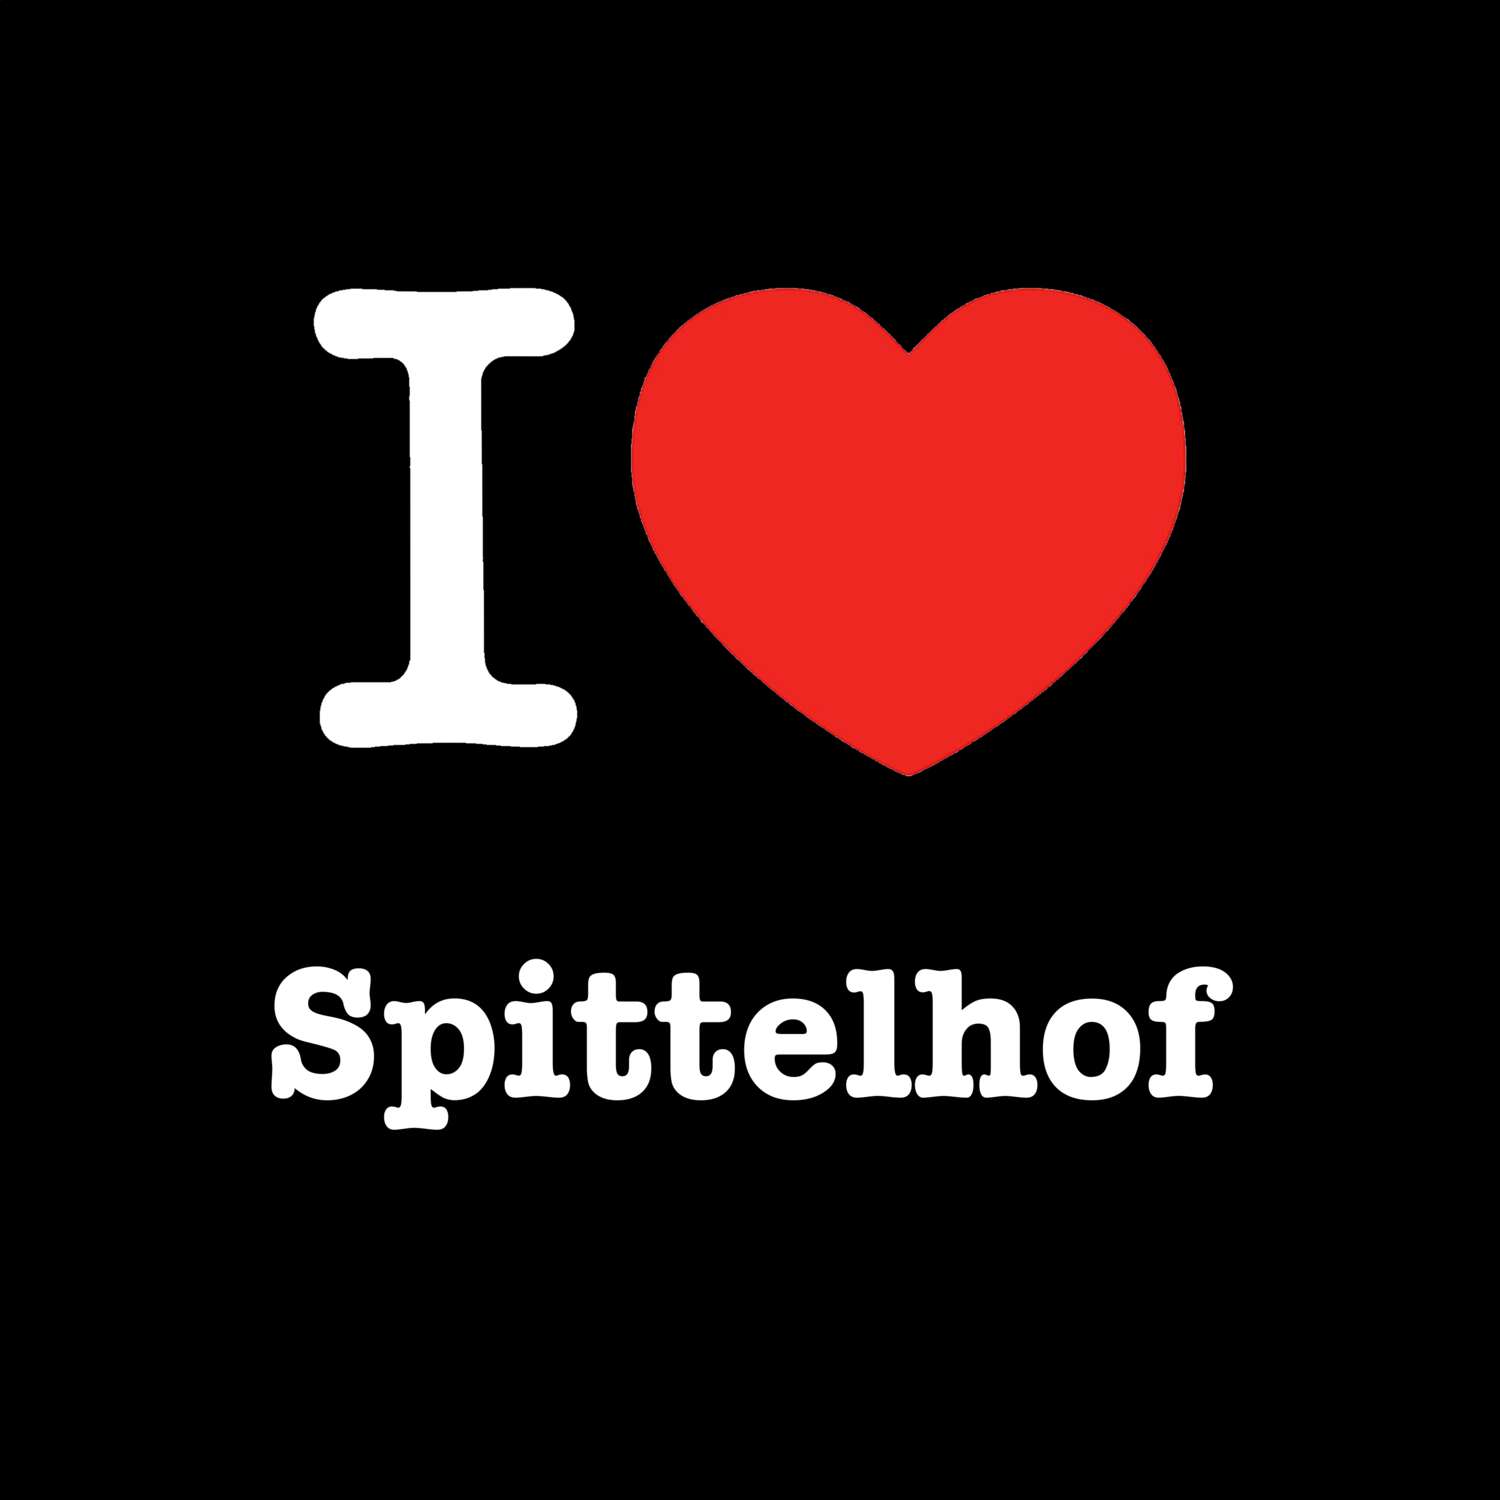 Spittelhof T-Shirt »I love«